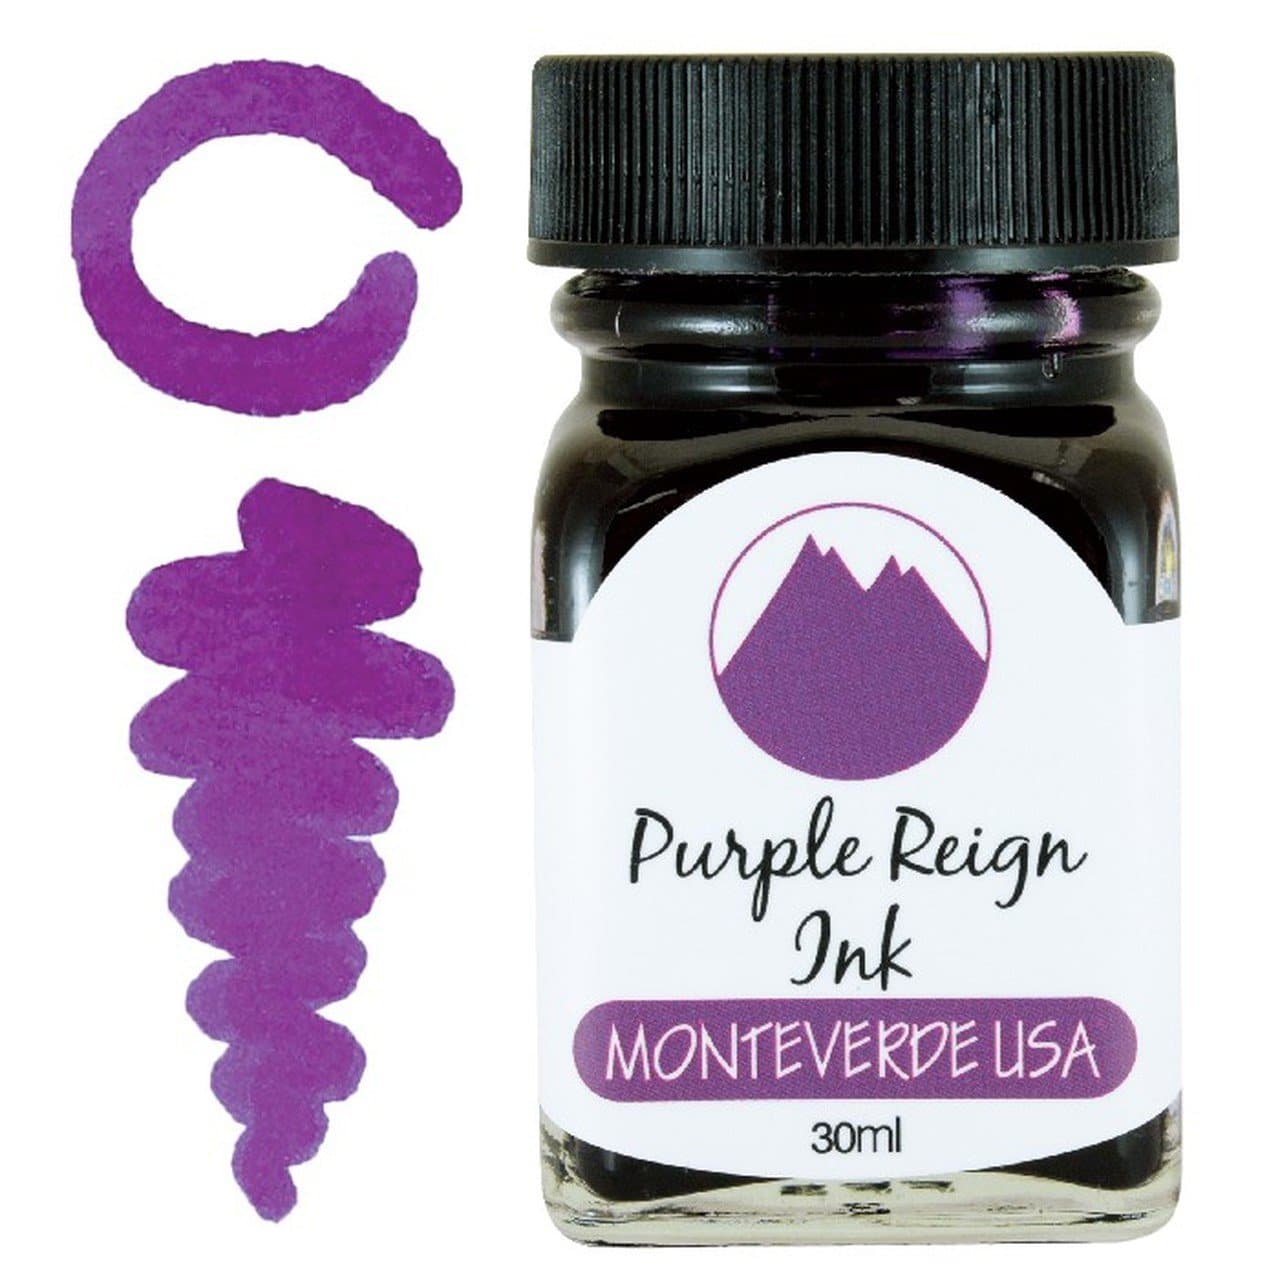 Monterverde Ink Core 30ml - Purple Reign - Blesket Canada